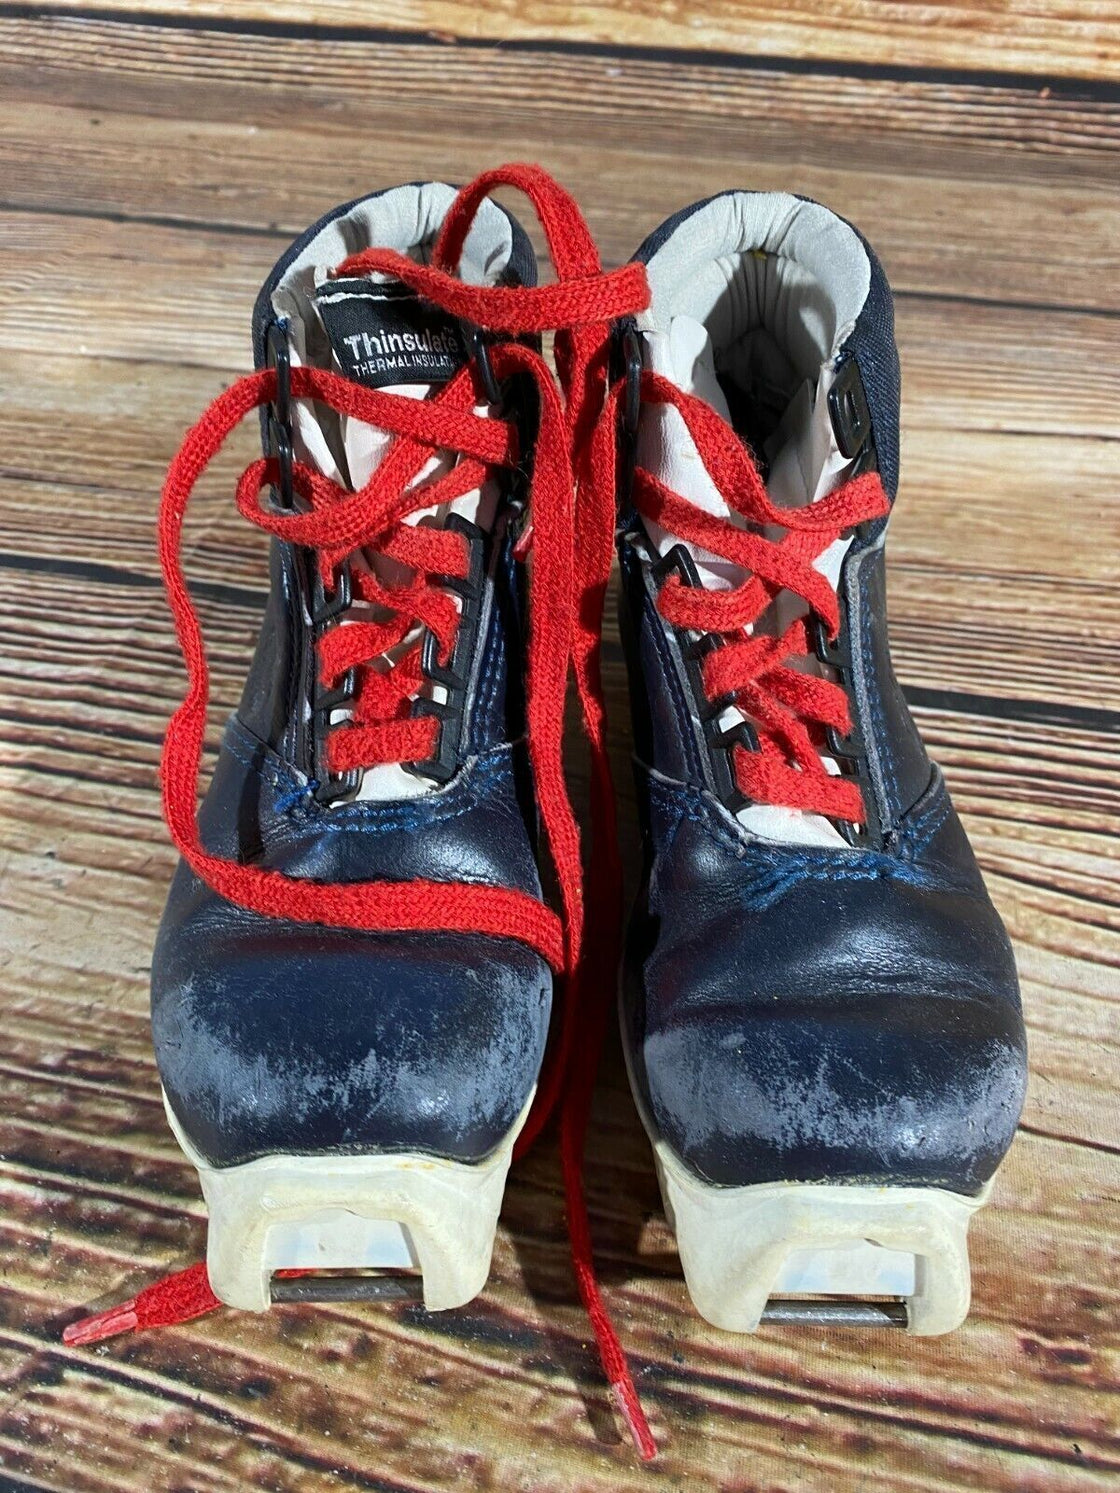 SALOMON Leather Kids Nordic Cross Country Ski Boots Size EU32 US1.5 SNS S-59